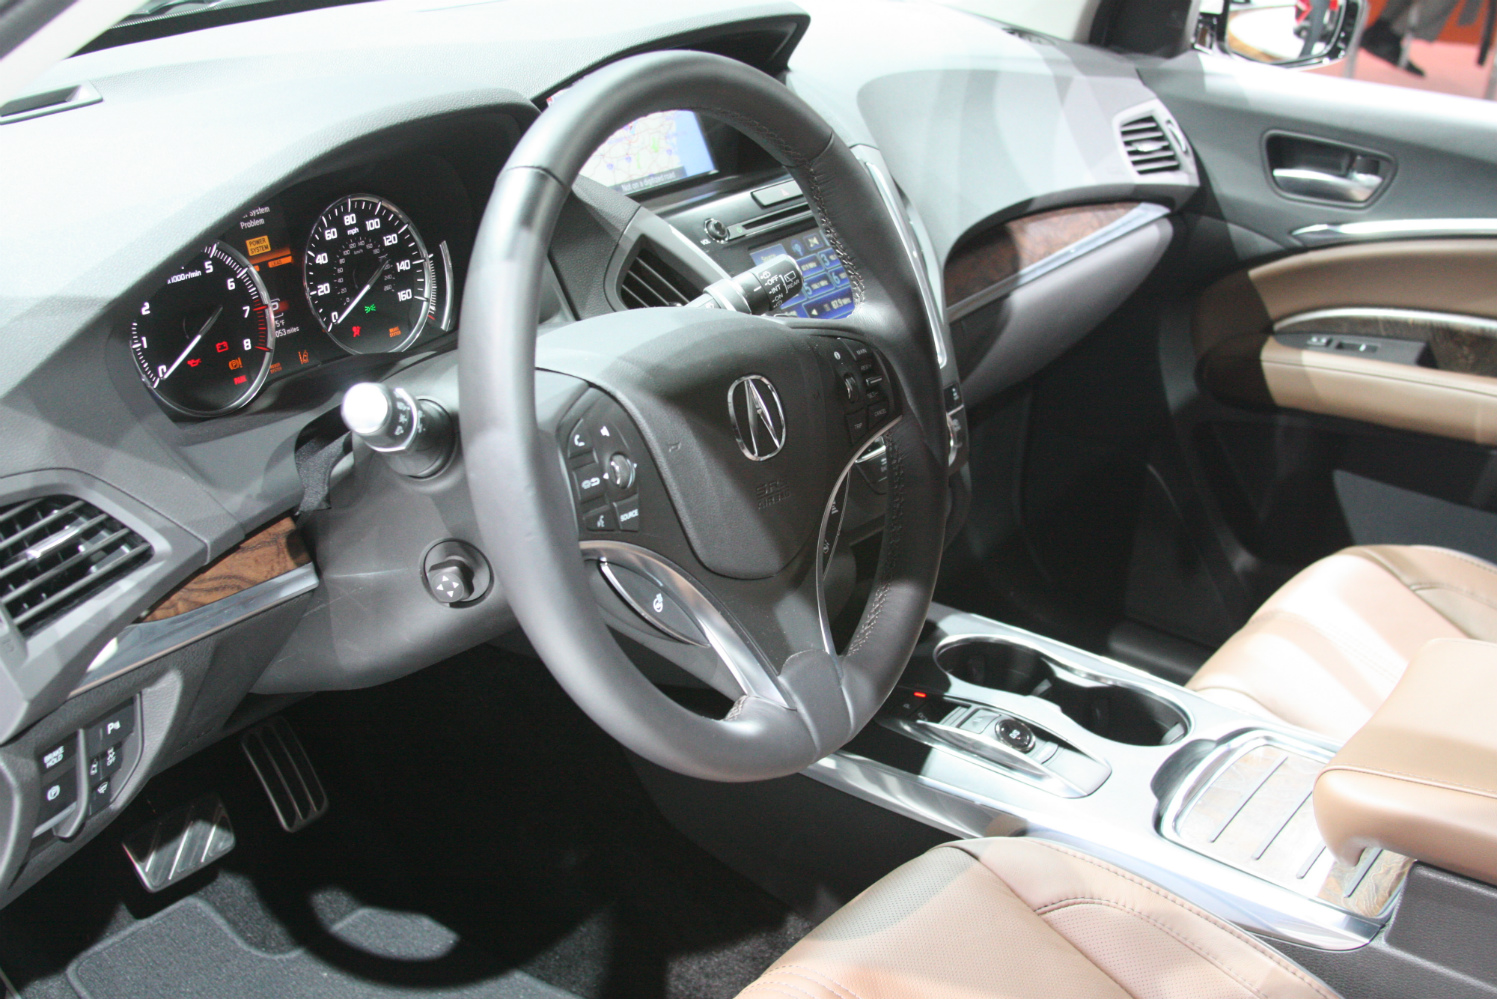 2017 Acura MDX cockpit